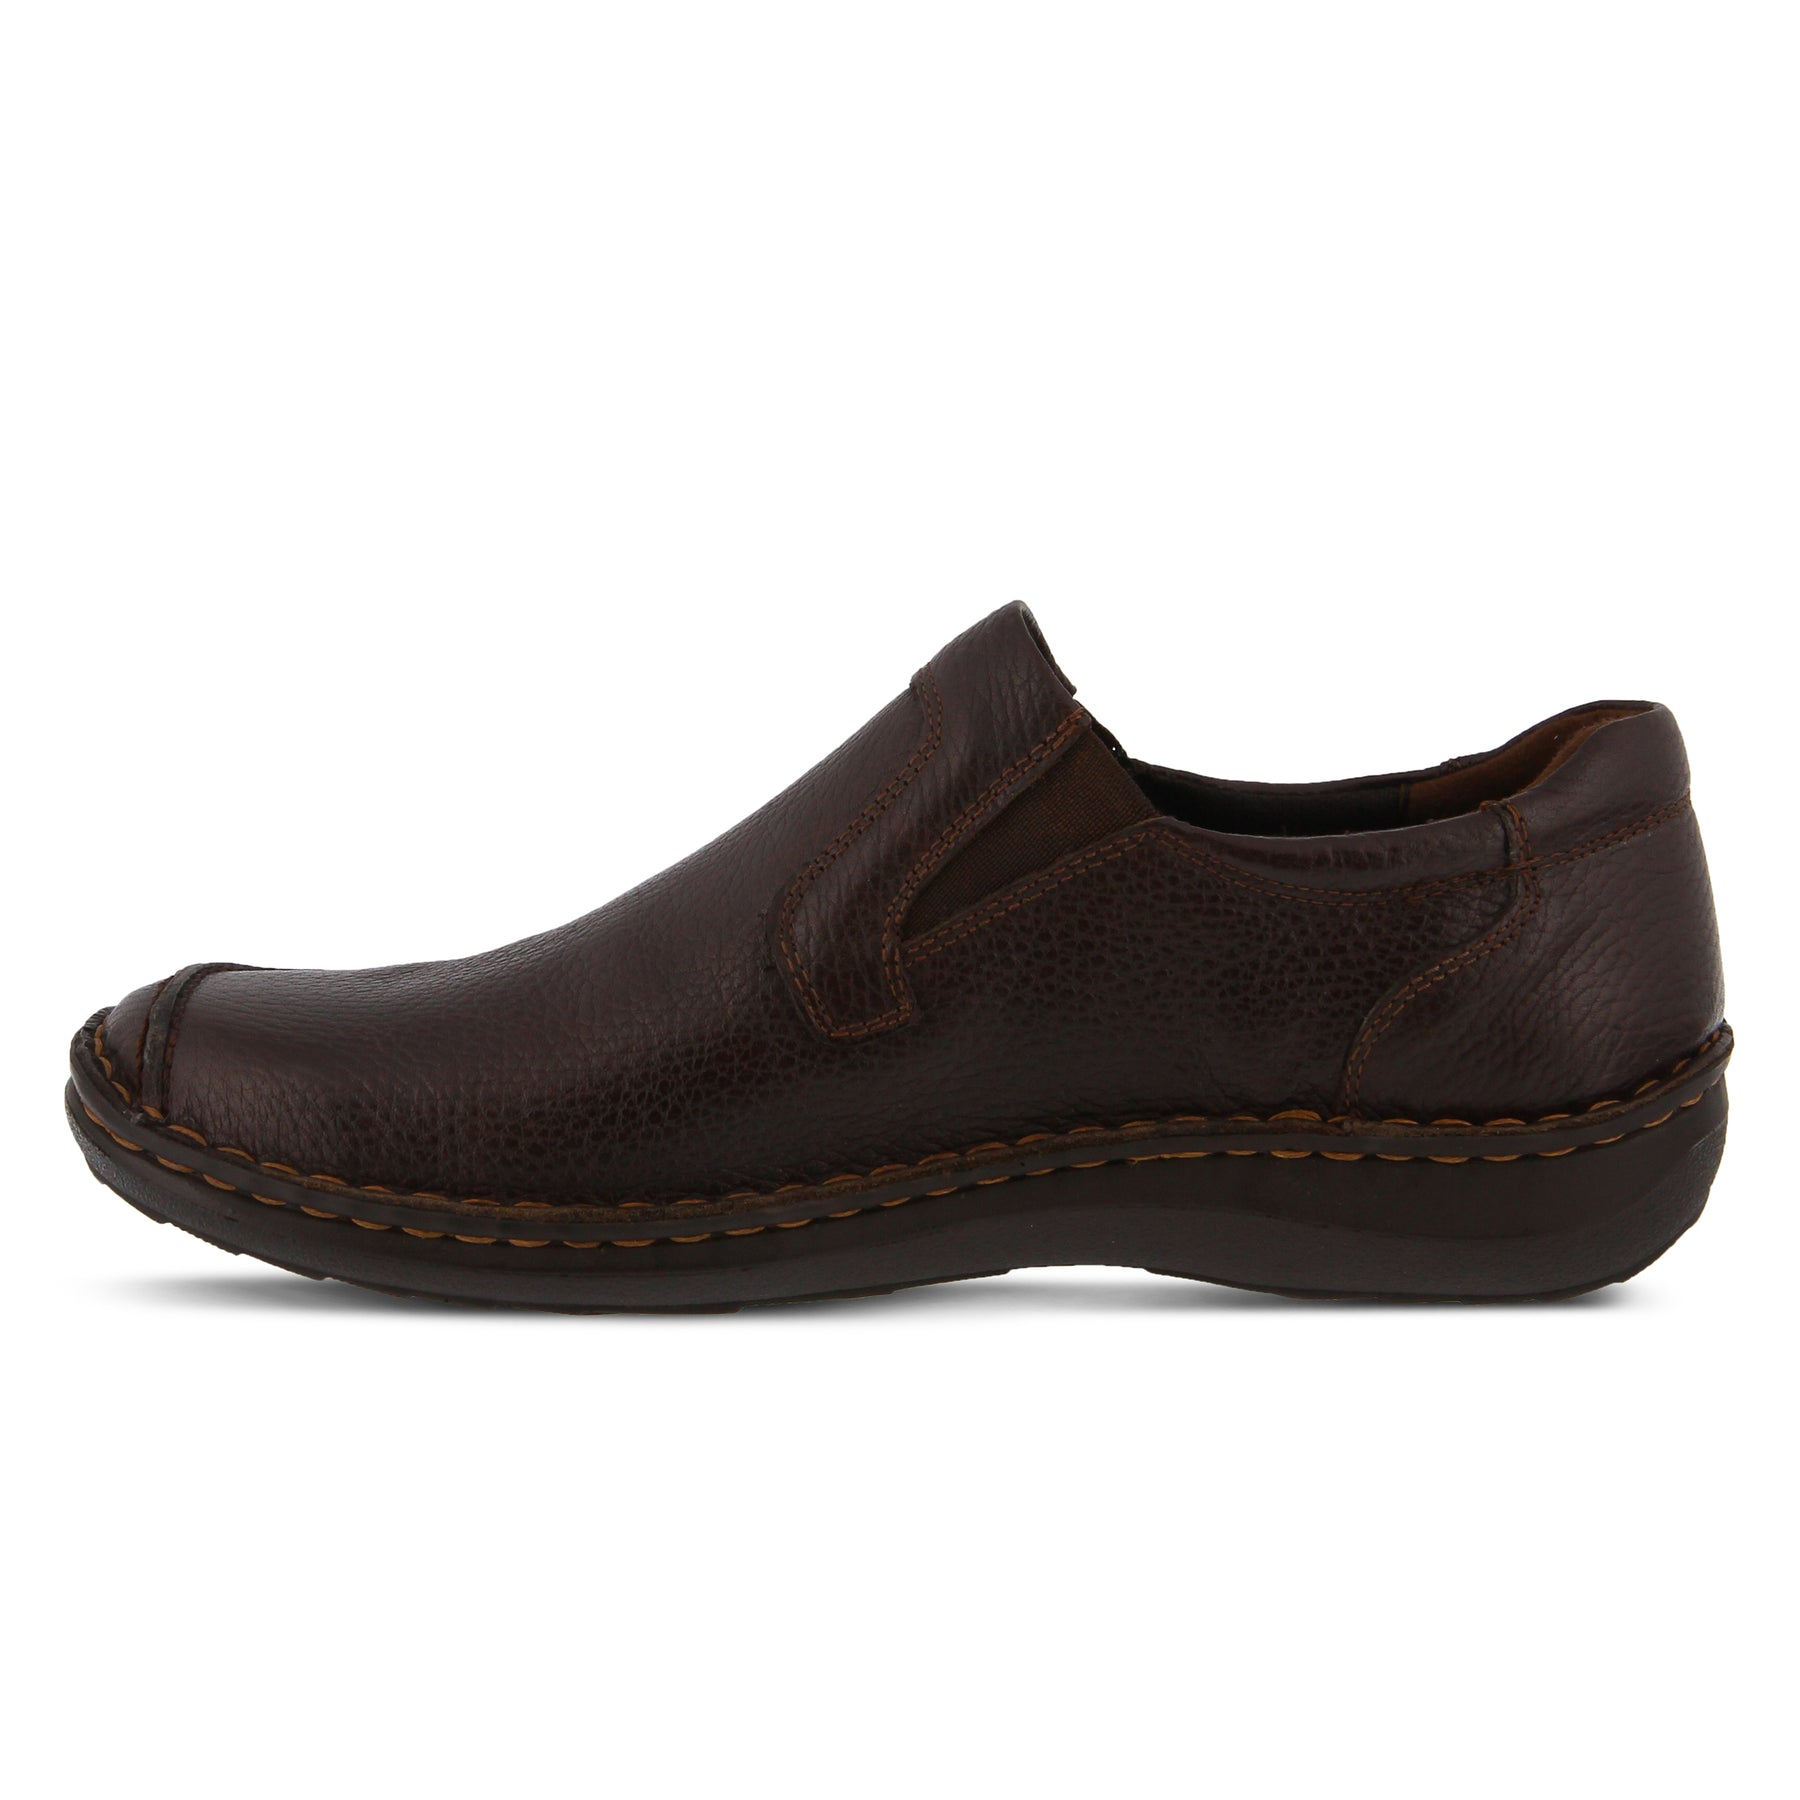 BLACK NICCOLO MEN'S SLIP-ON SHOE by SPRING STEP MEN – Spring Step Shoes